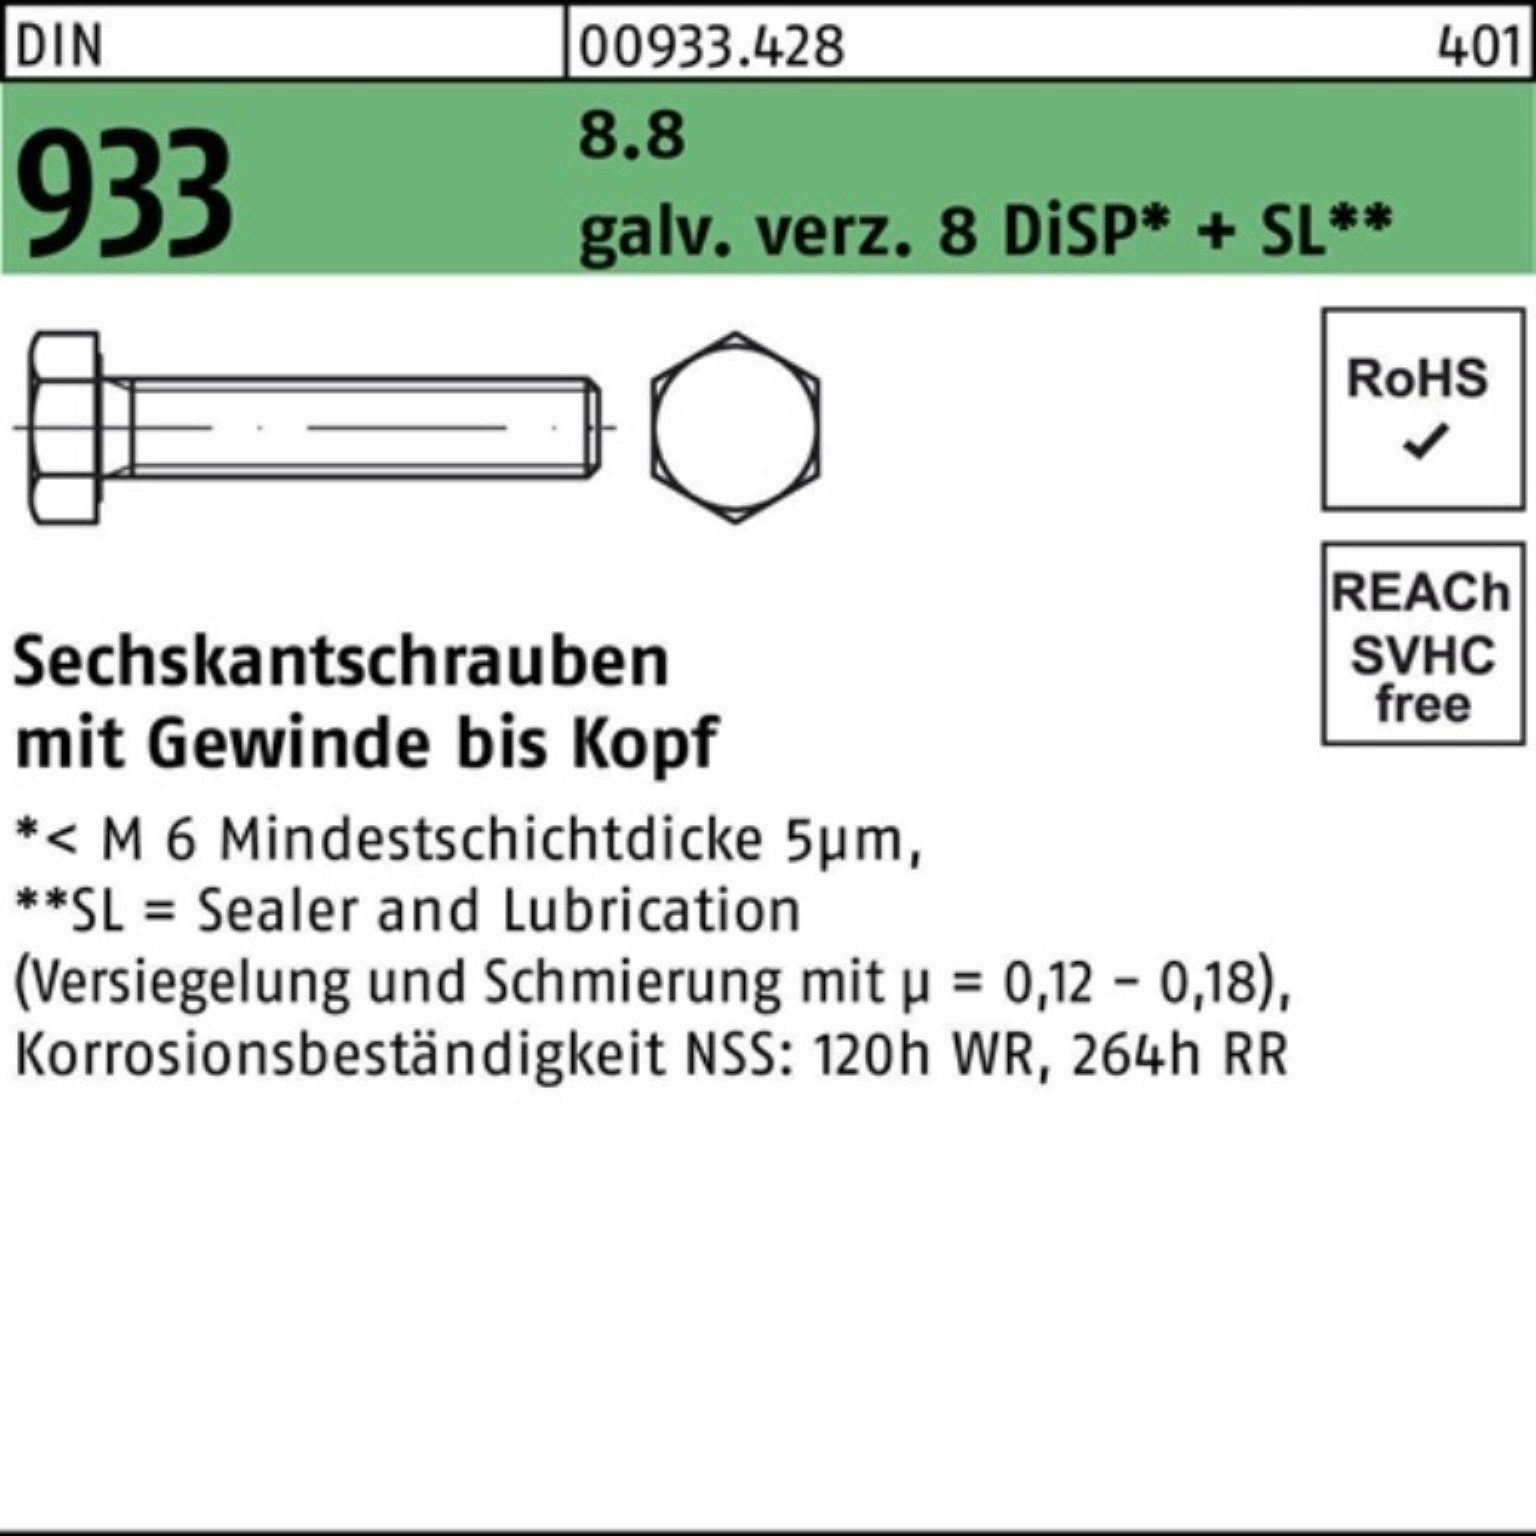 M4x DIN Pack Zn DiSP Sechskantschraube 50 500er + 8.8 VG SL Reyher gal 933 40 Sechskantschraube